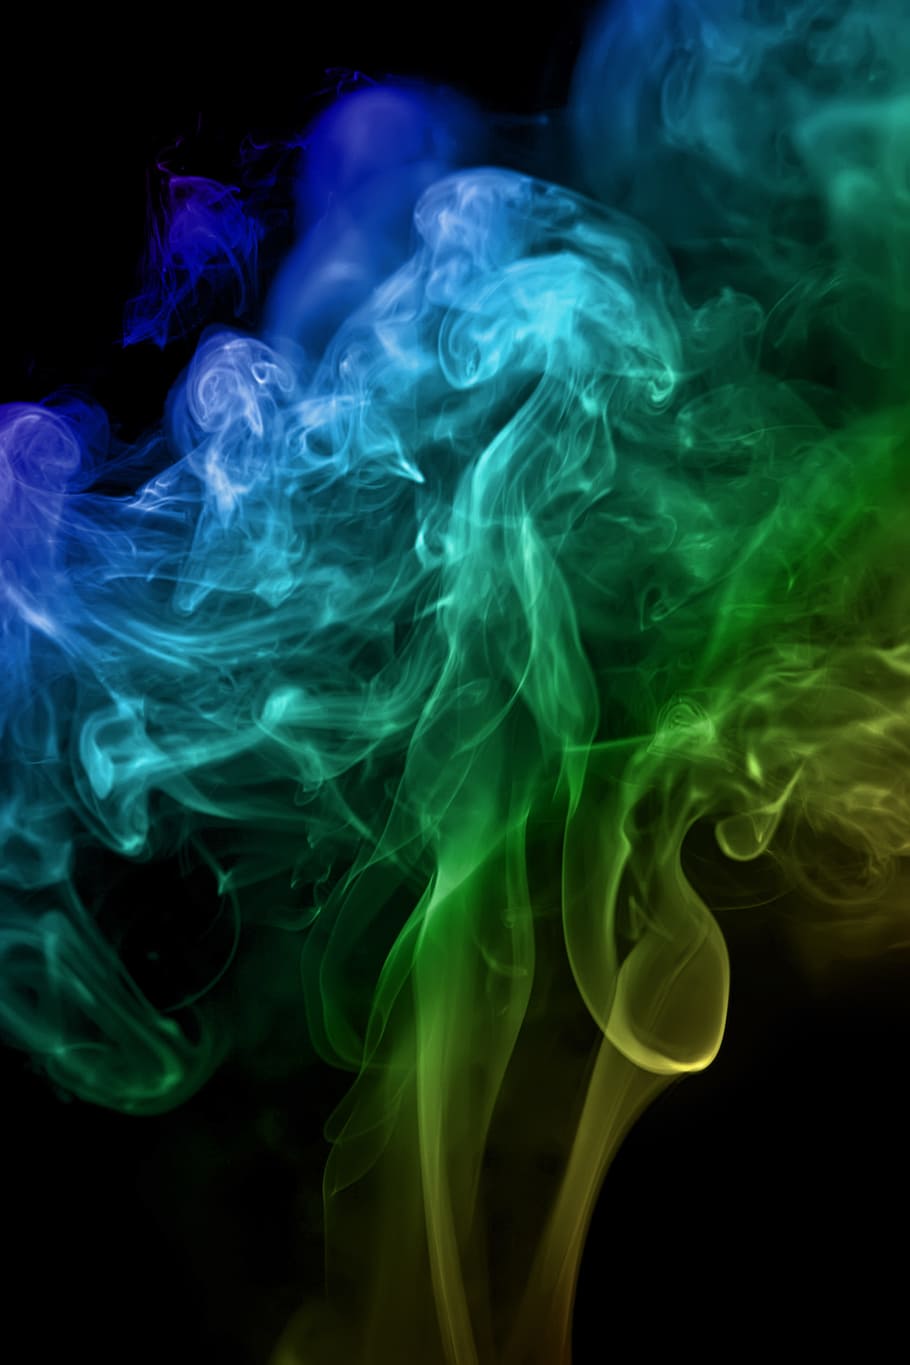 fumar, oler, color, aroma, resumen, fondo, aromaterapia, humo - estructura física, foto de estudio, fondo negro